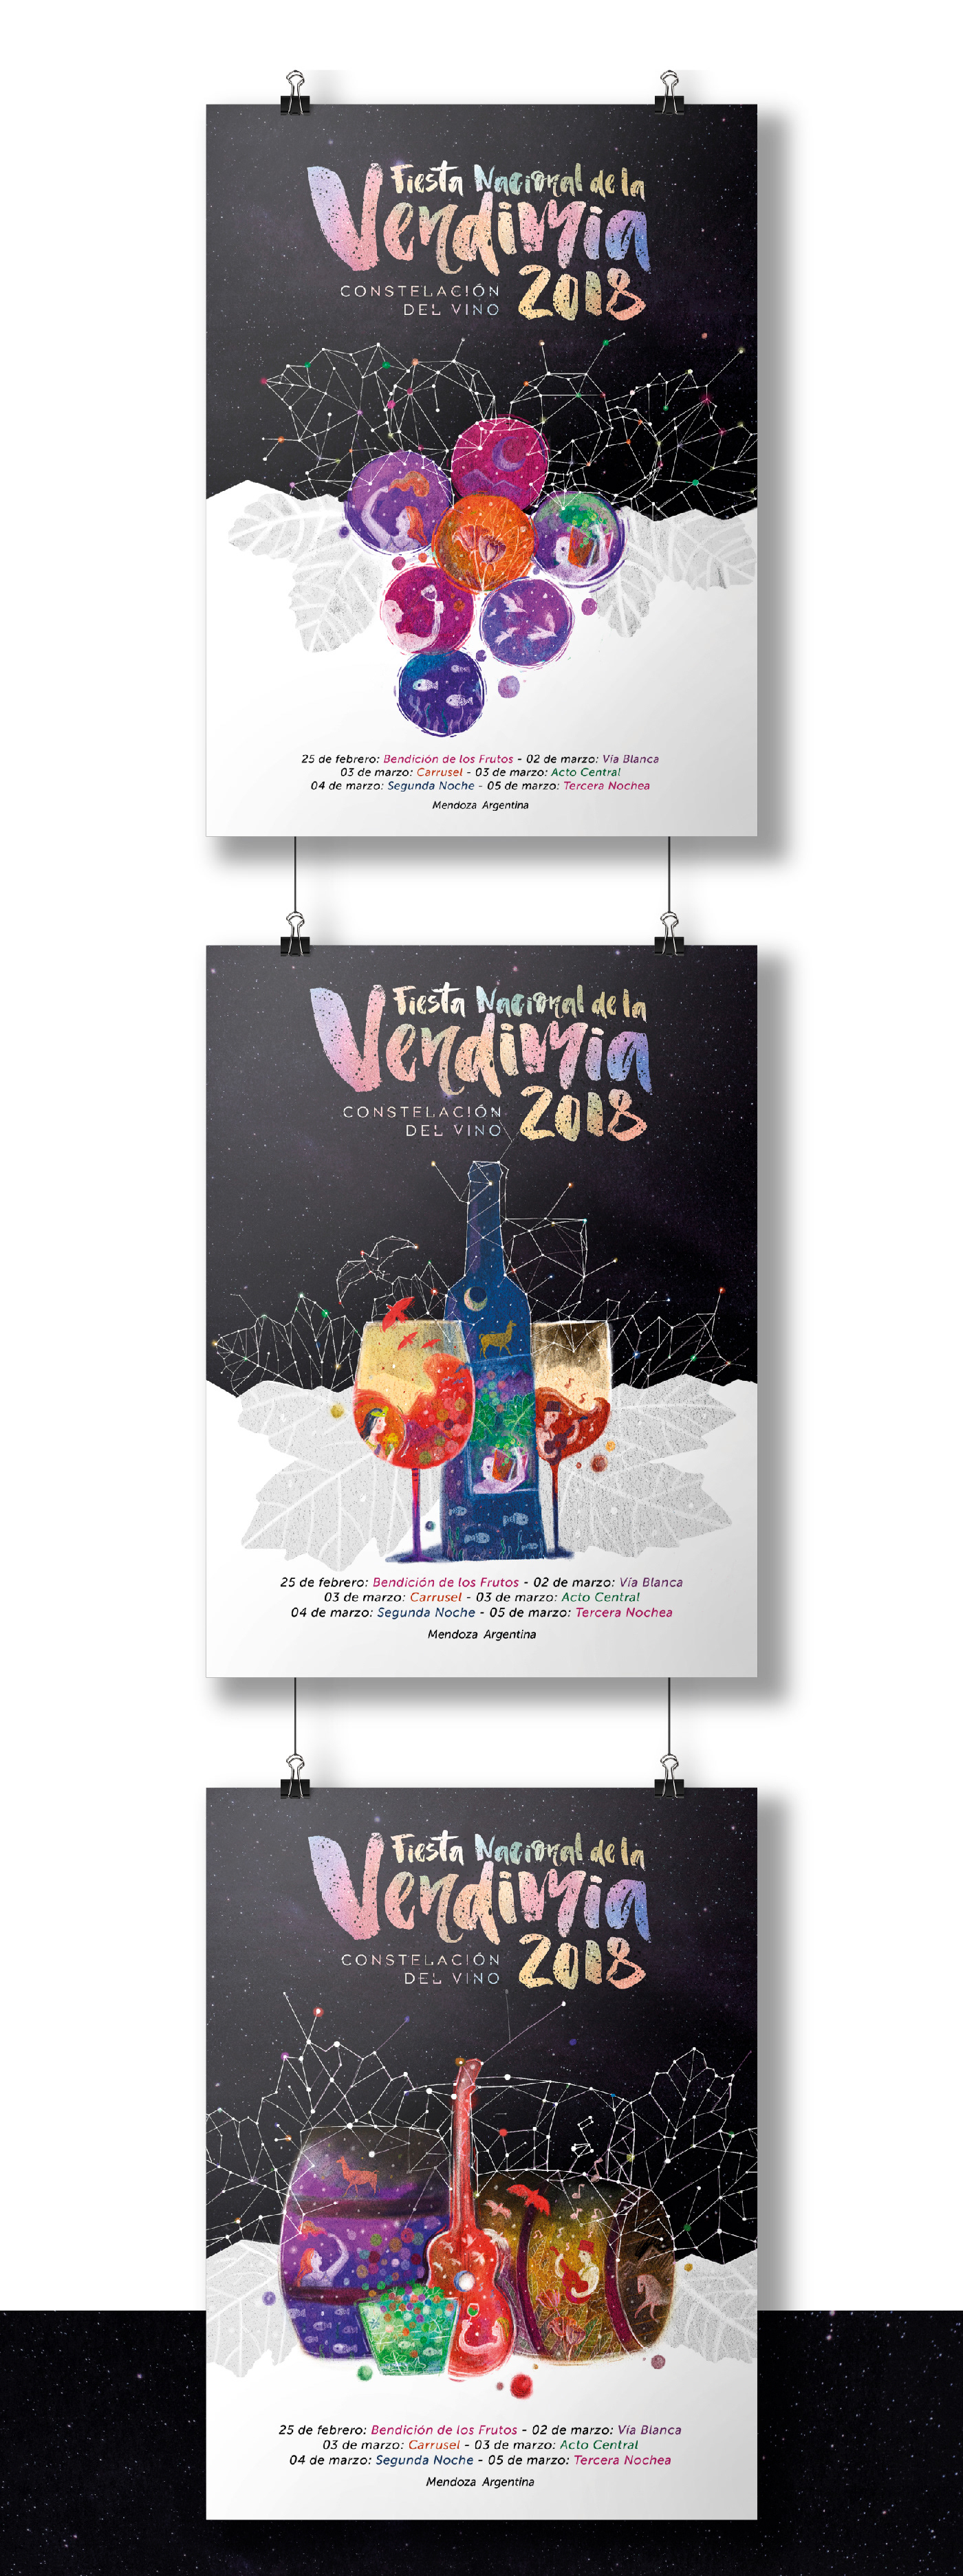 vendimia vendimia 2018 afiche fiesta nacional Concurso mendoza imagen ganador premio vino